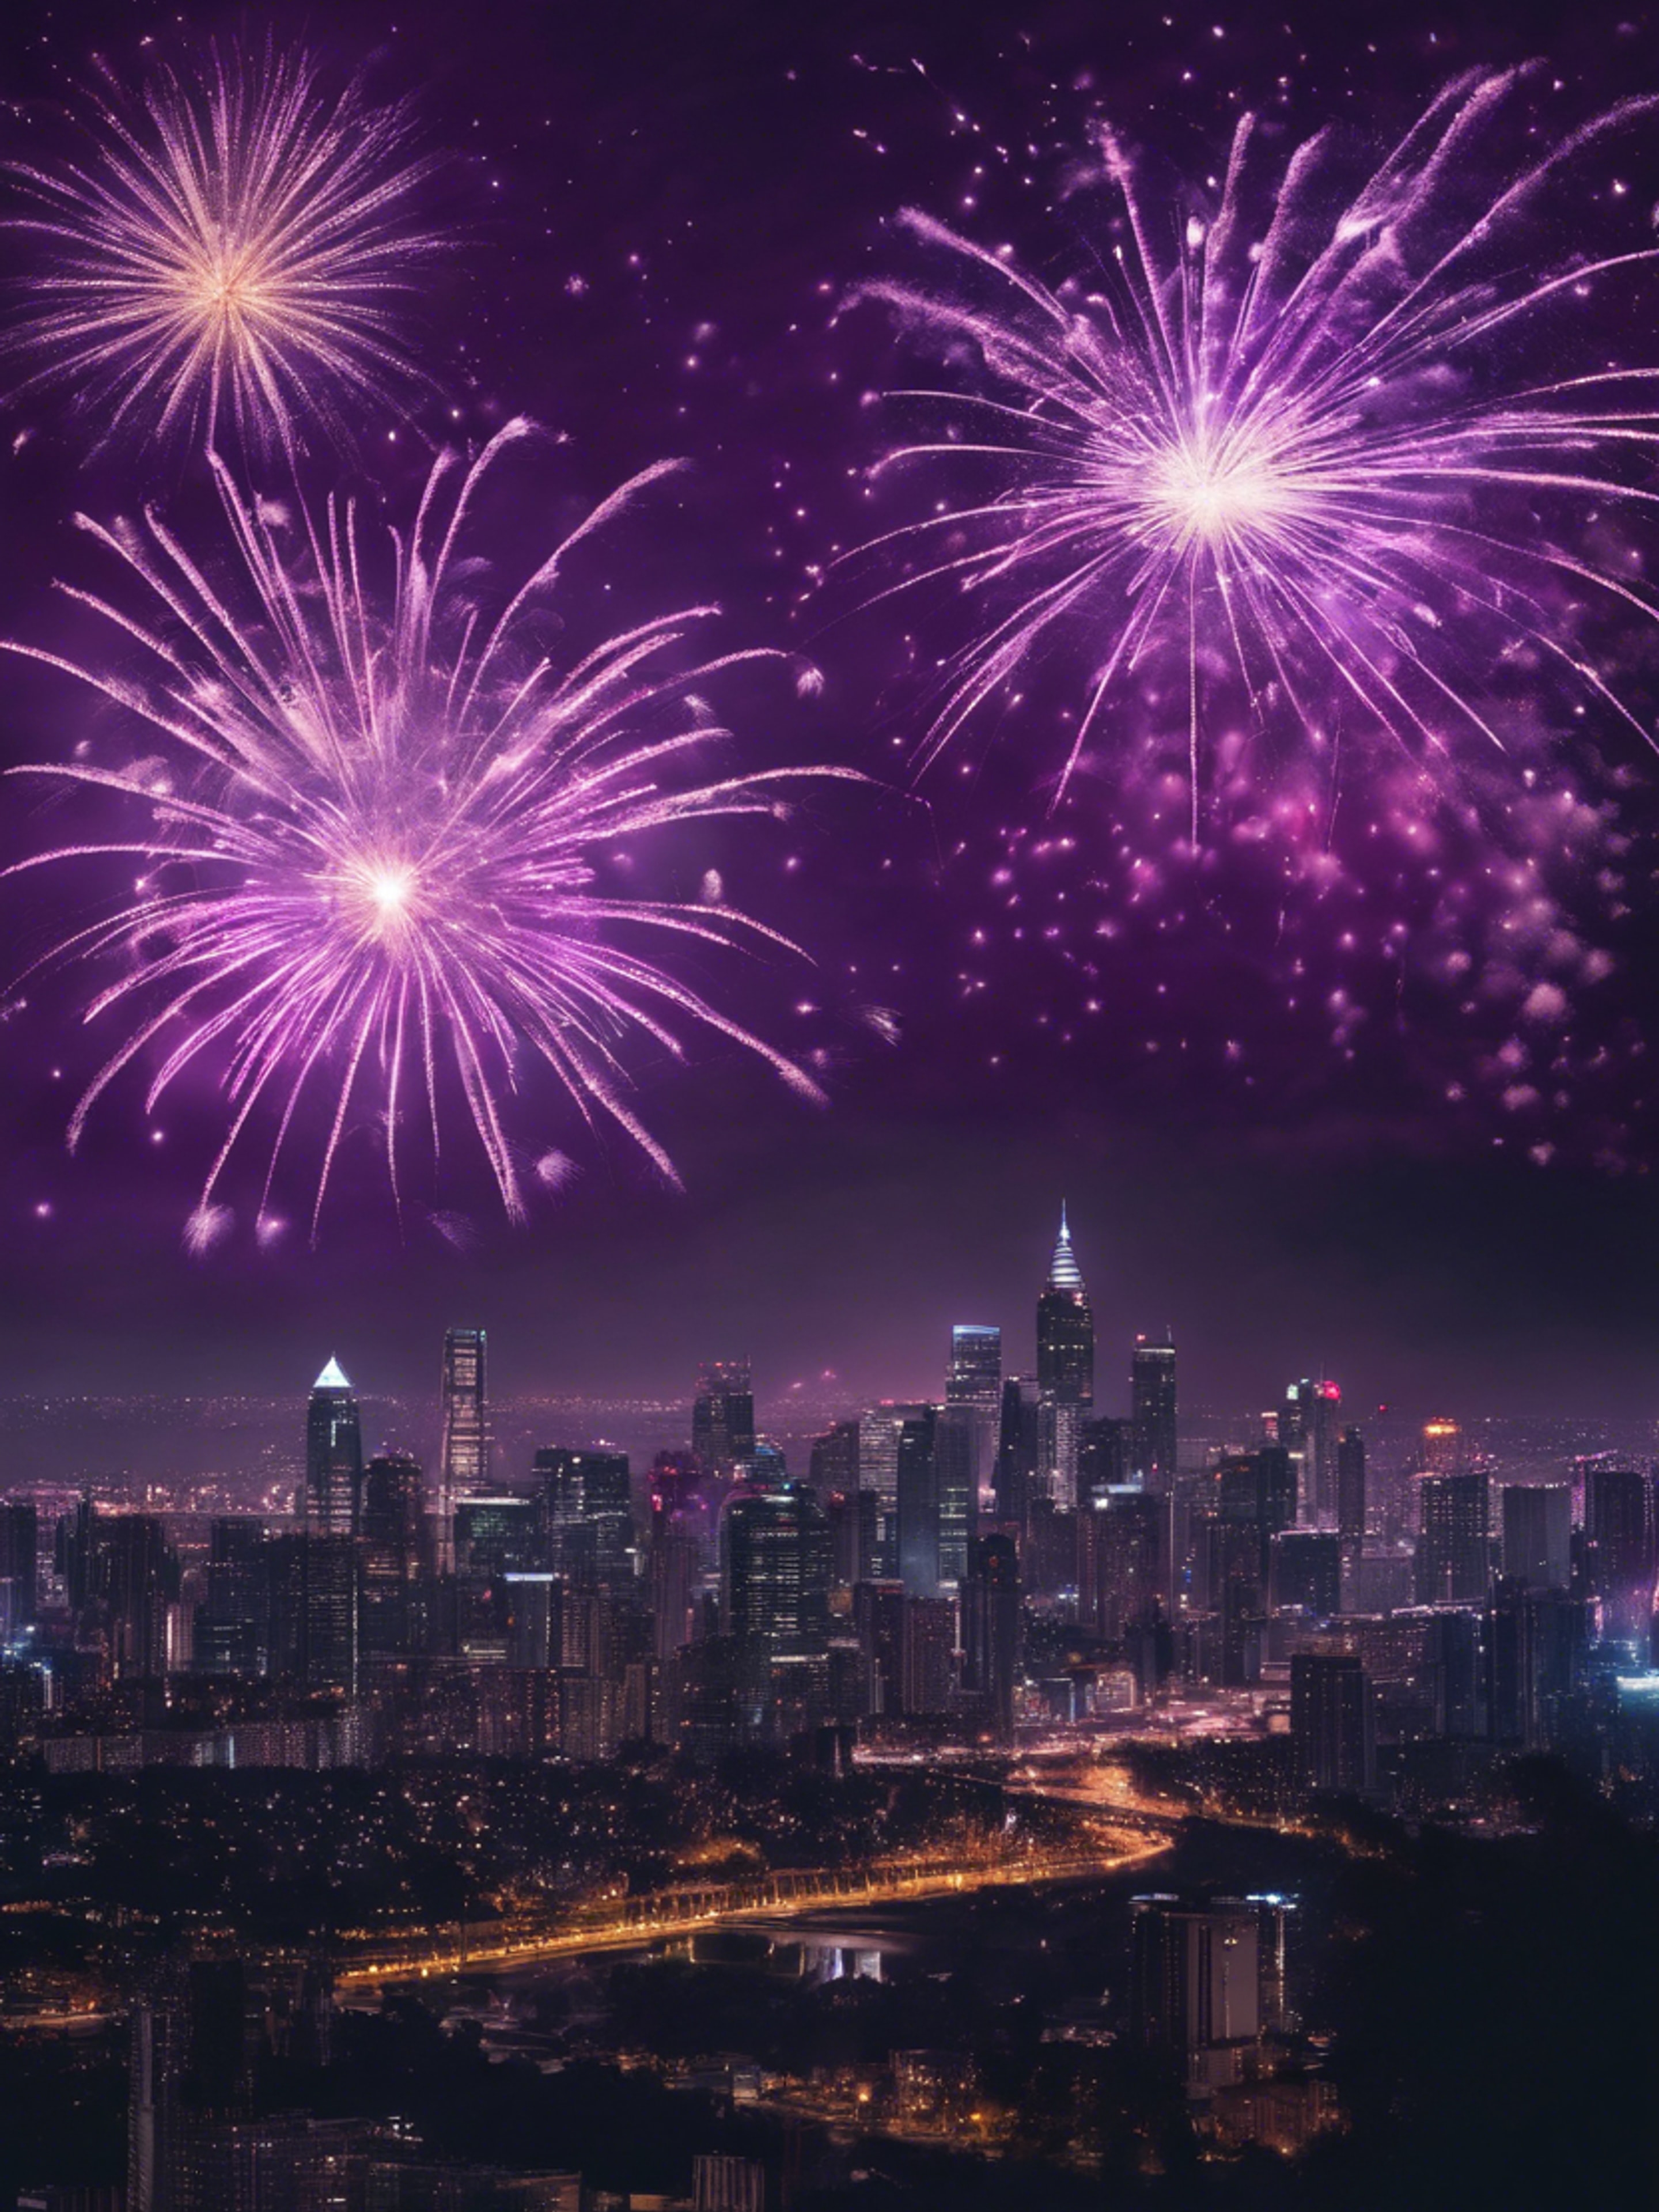 Dark purple fireworks illuminating the night's sky over an illuminated city skyline. Tapet[a2398988017f44d3a04c]